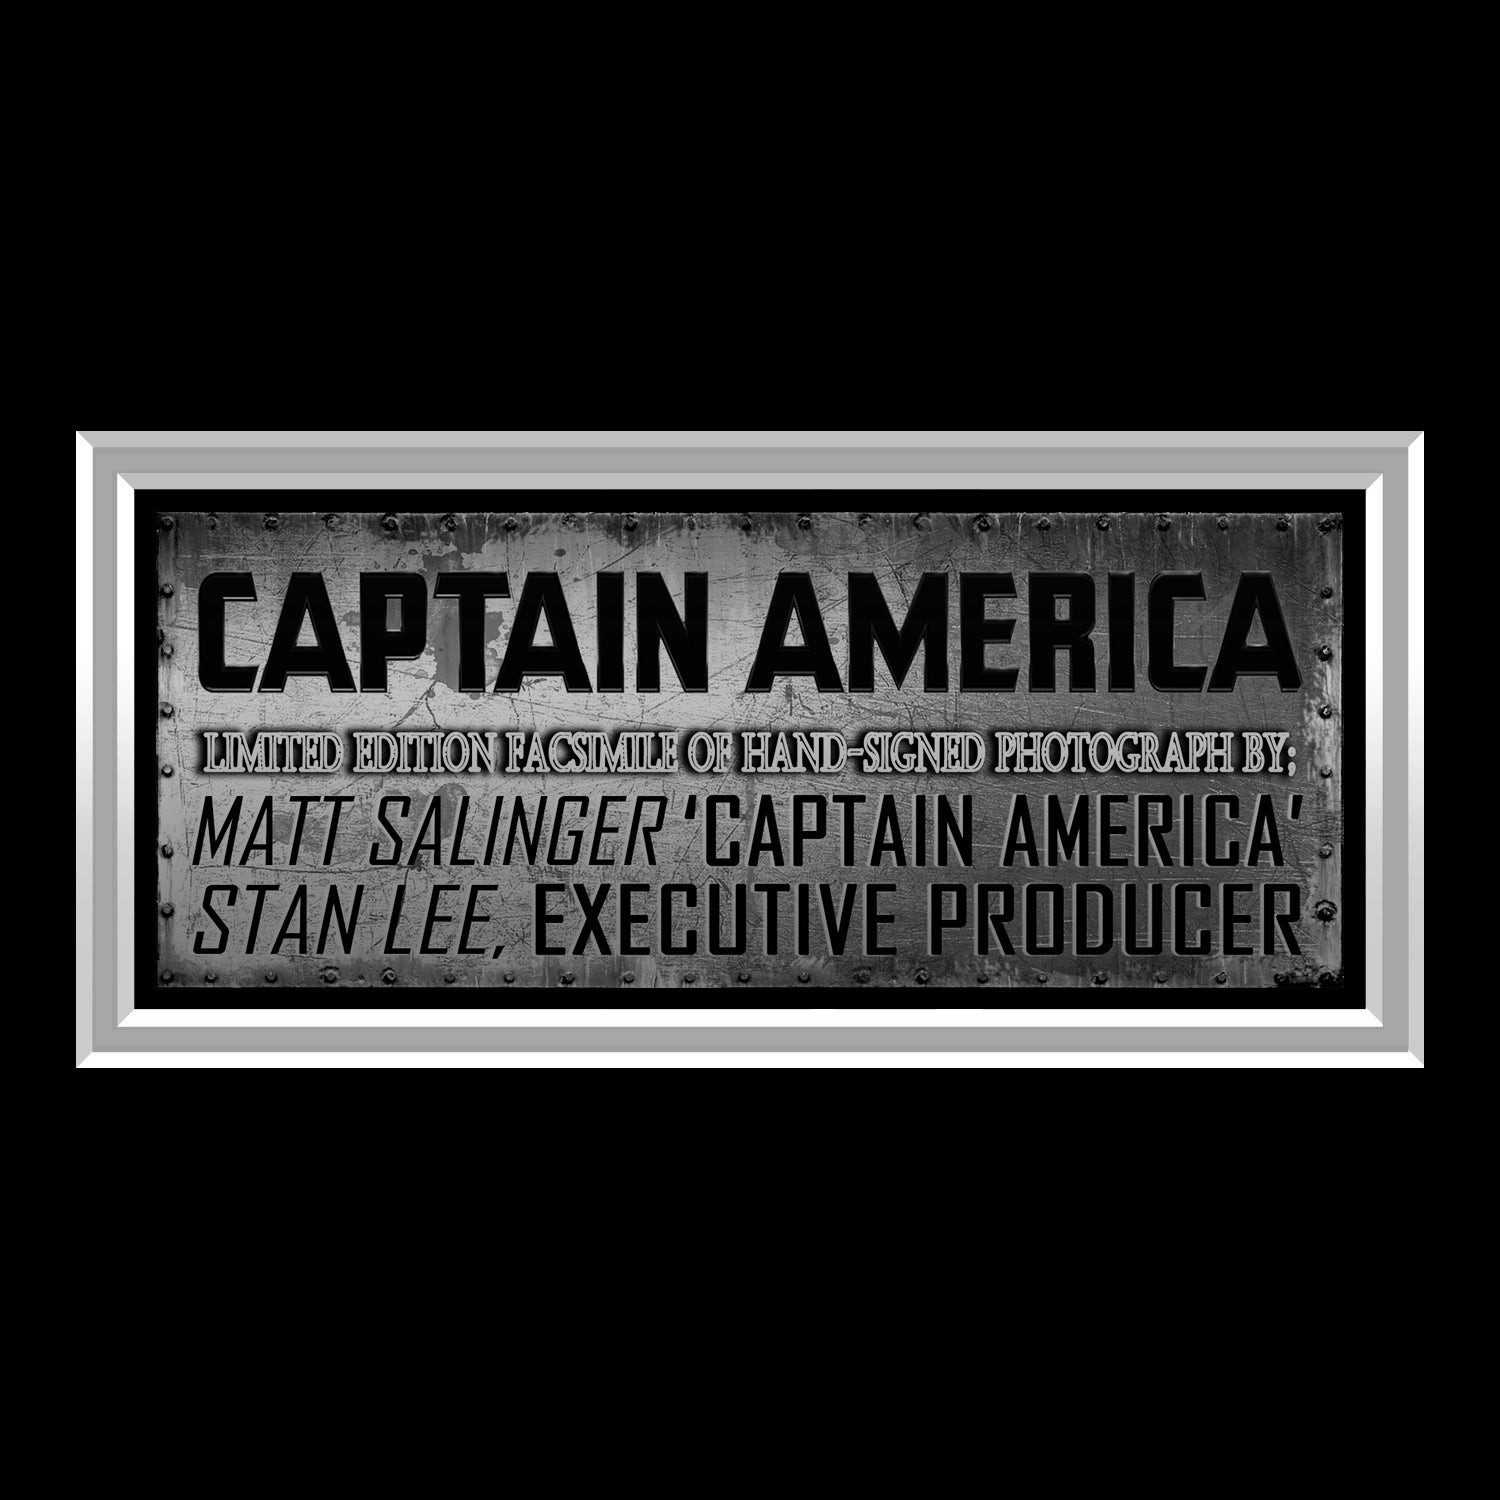 Captain America (1990) Photo Limited Signature Edition Custom